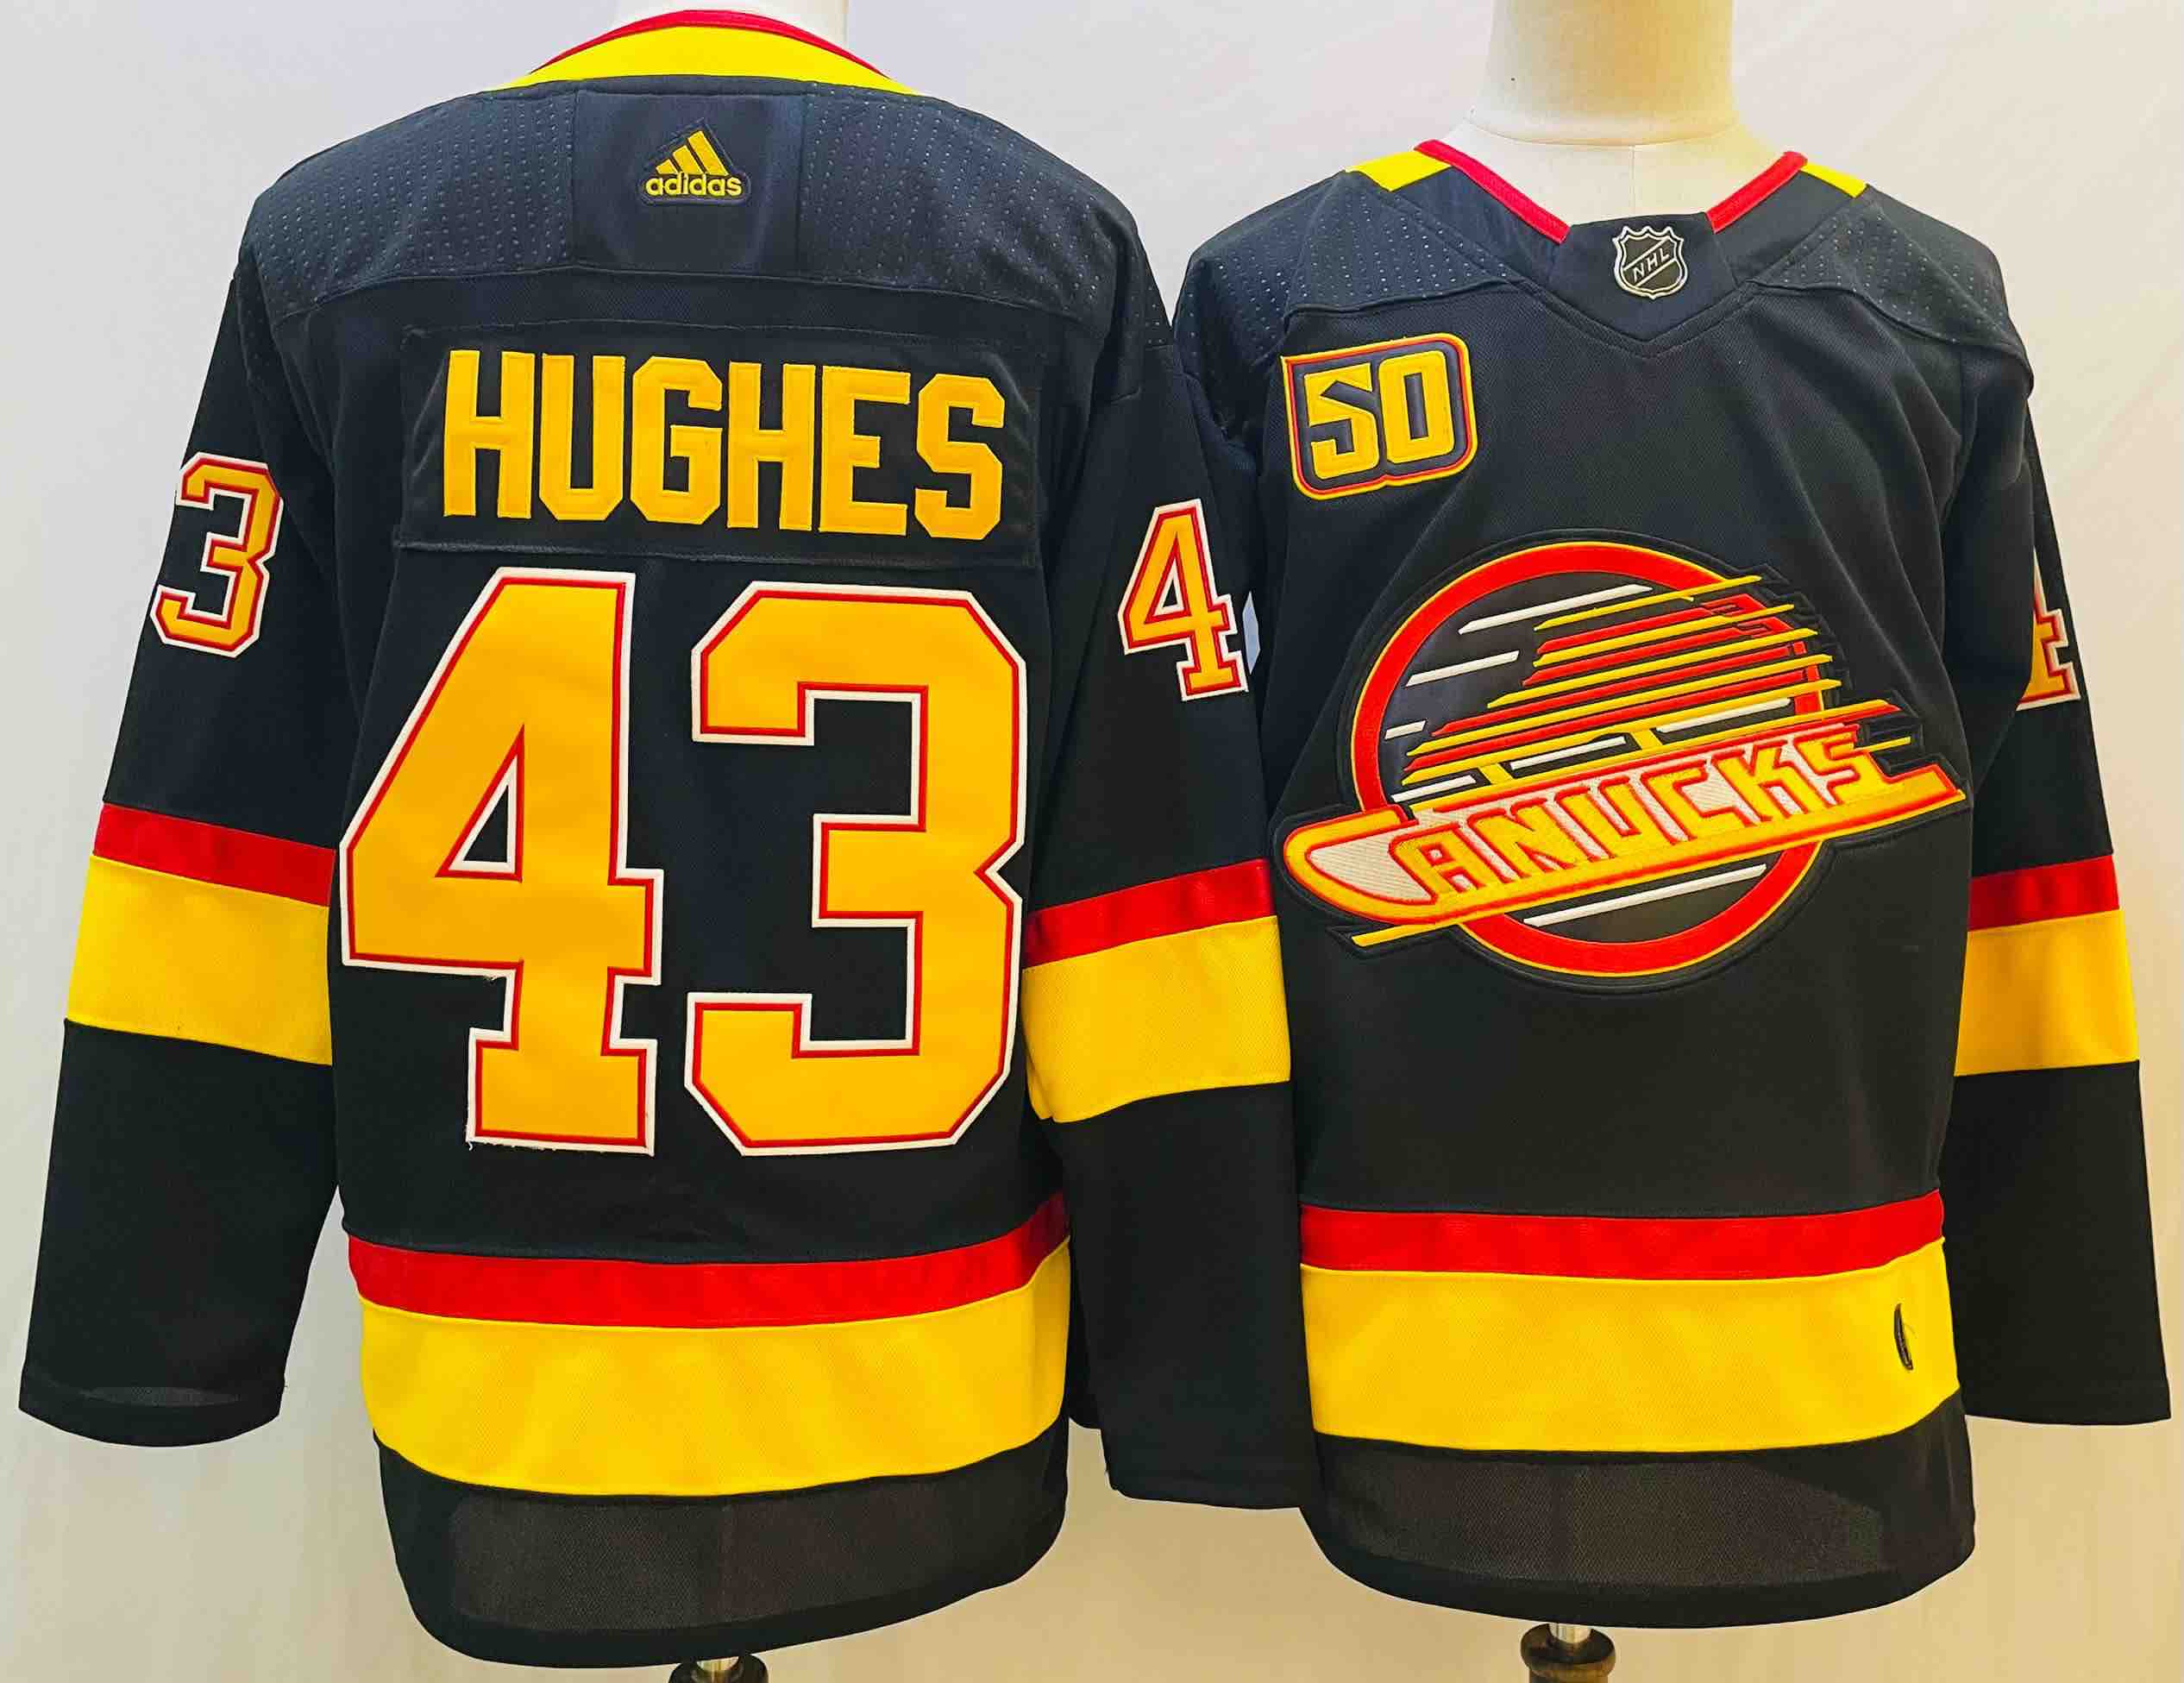 NHL Vancouver Canucks #43 Hughes Black Jersey